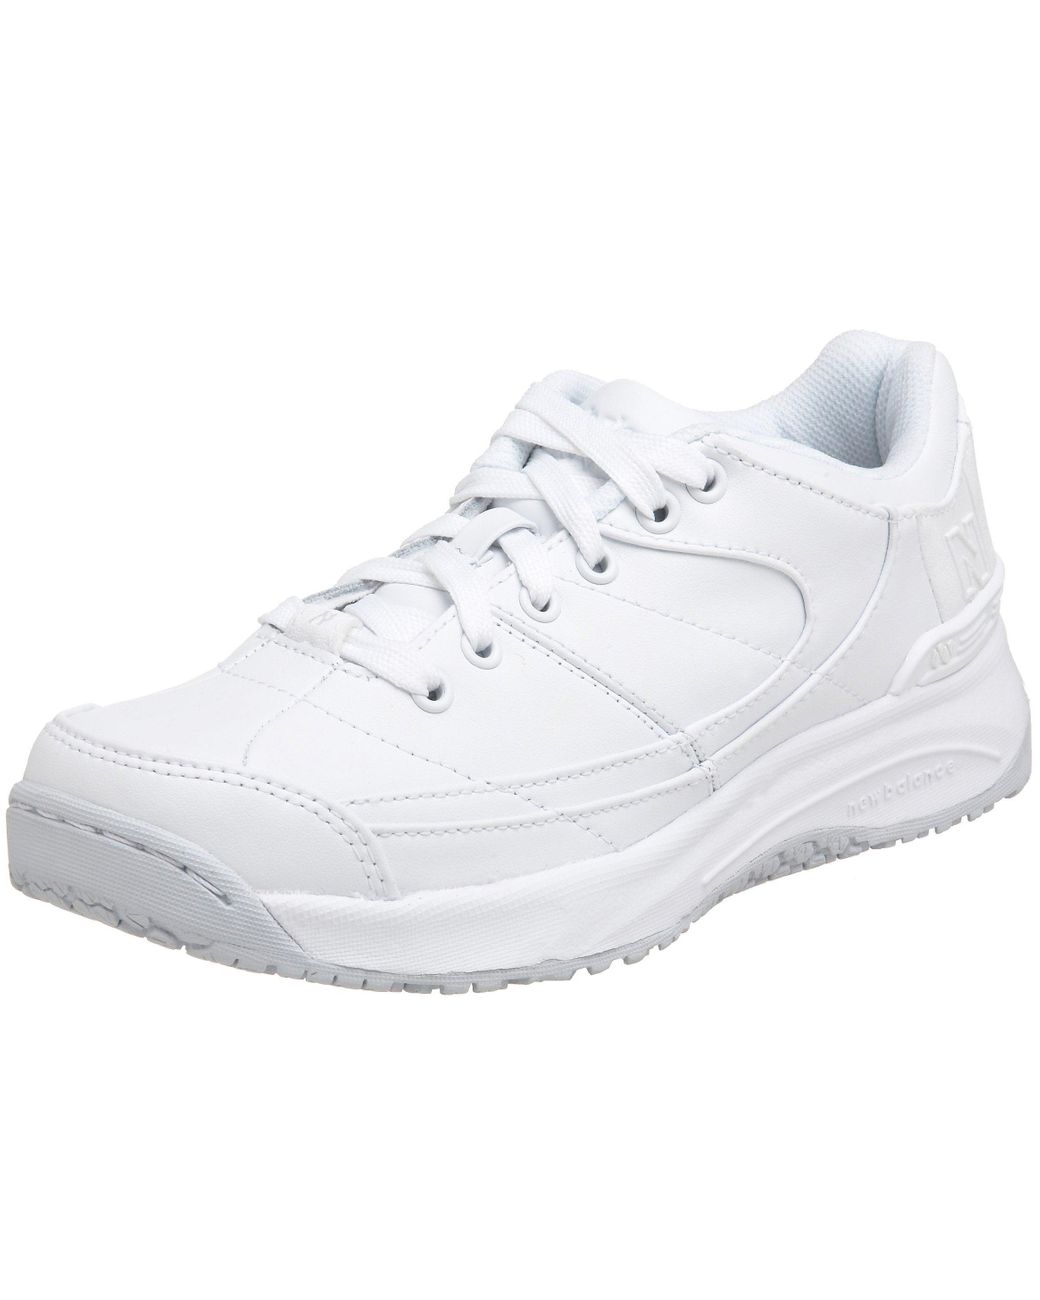 New Balance 631 V1 Walking Shoe in White | Lyst